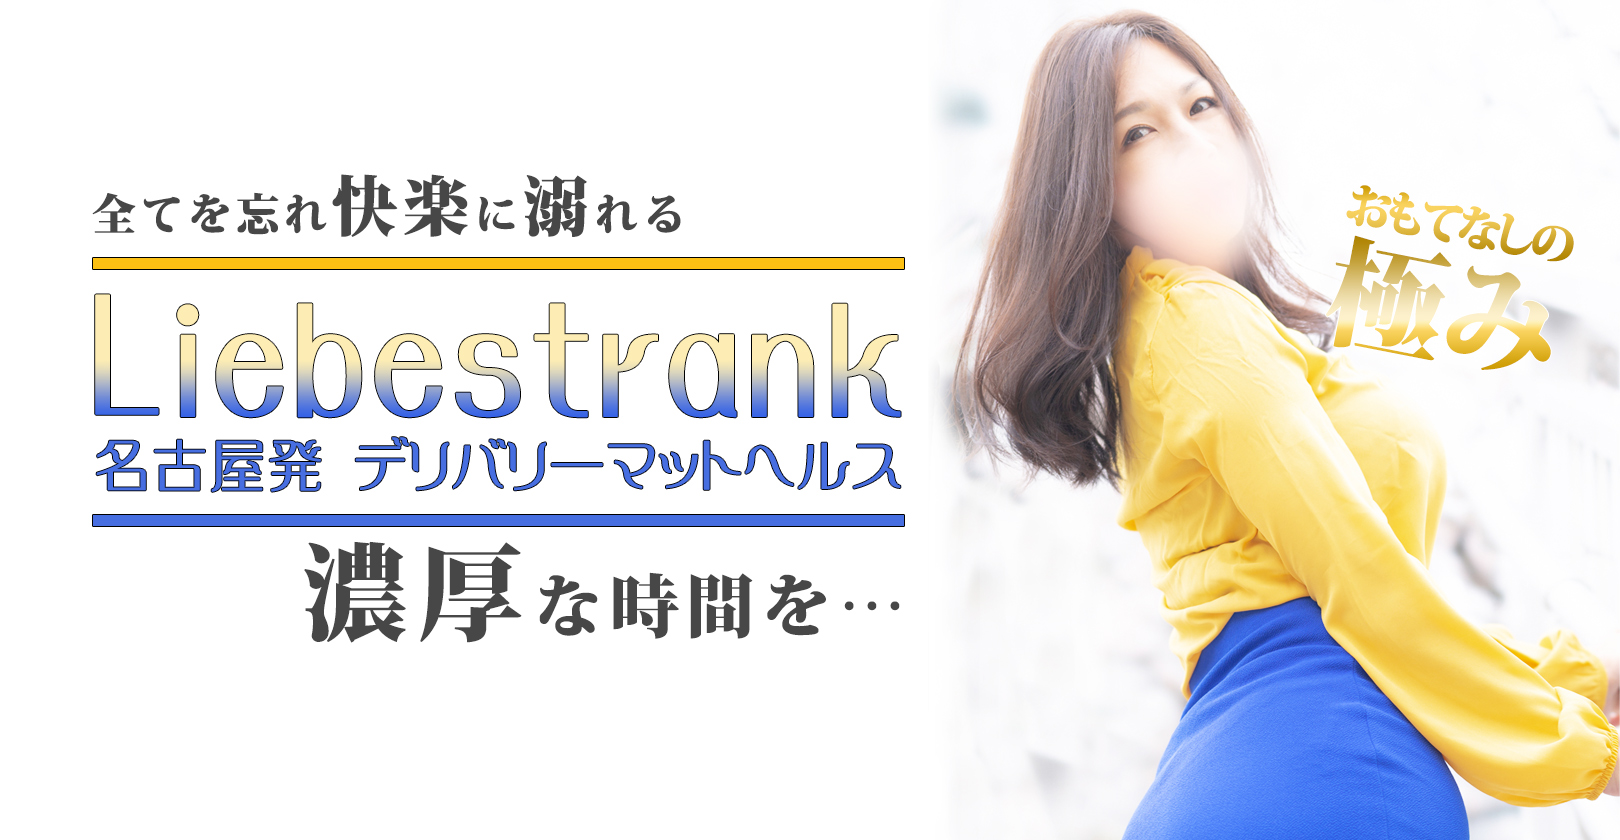 Liebestrank|名古屋発 デリバリーマットヘルス